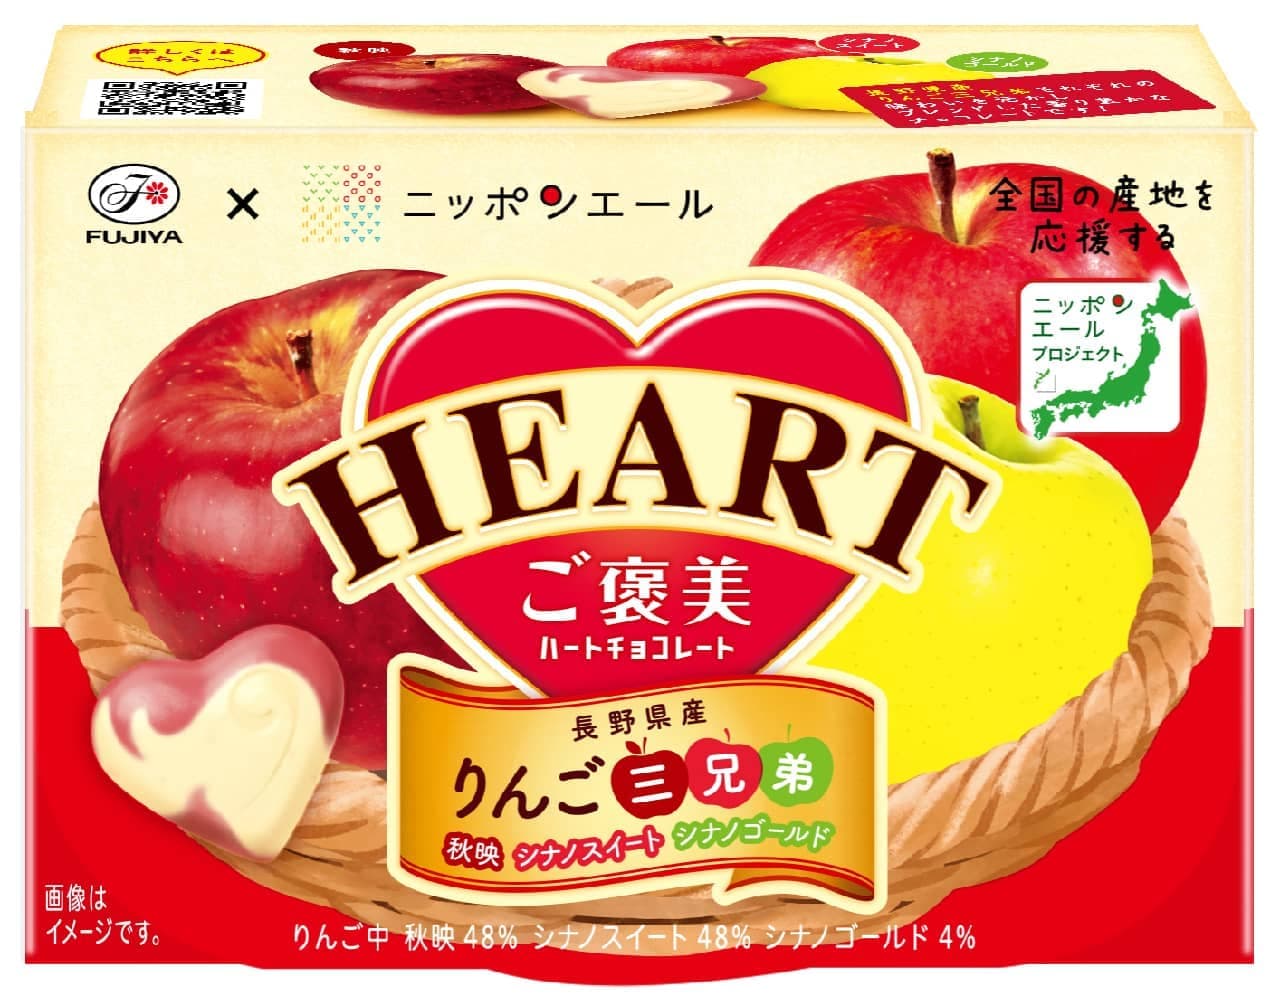 Fujiya "Reward Heart Chocolate (Three Apple Brothers)